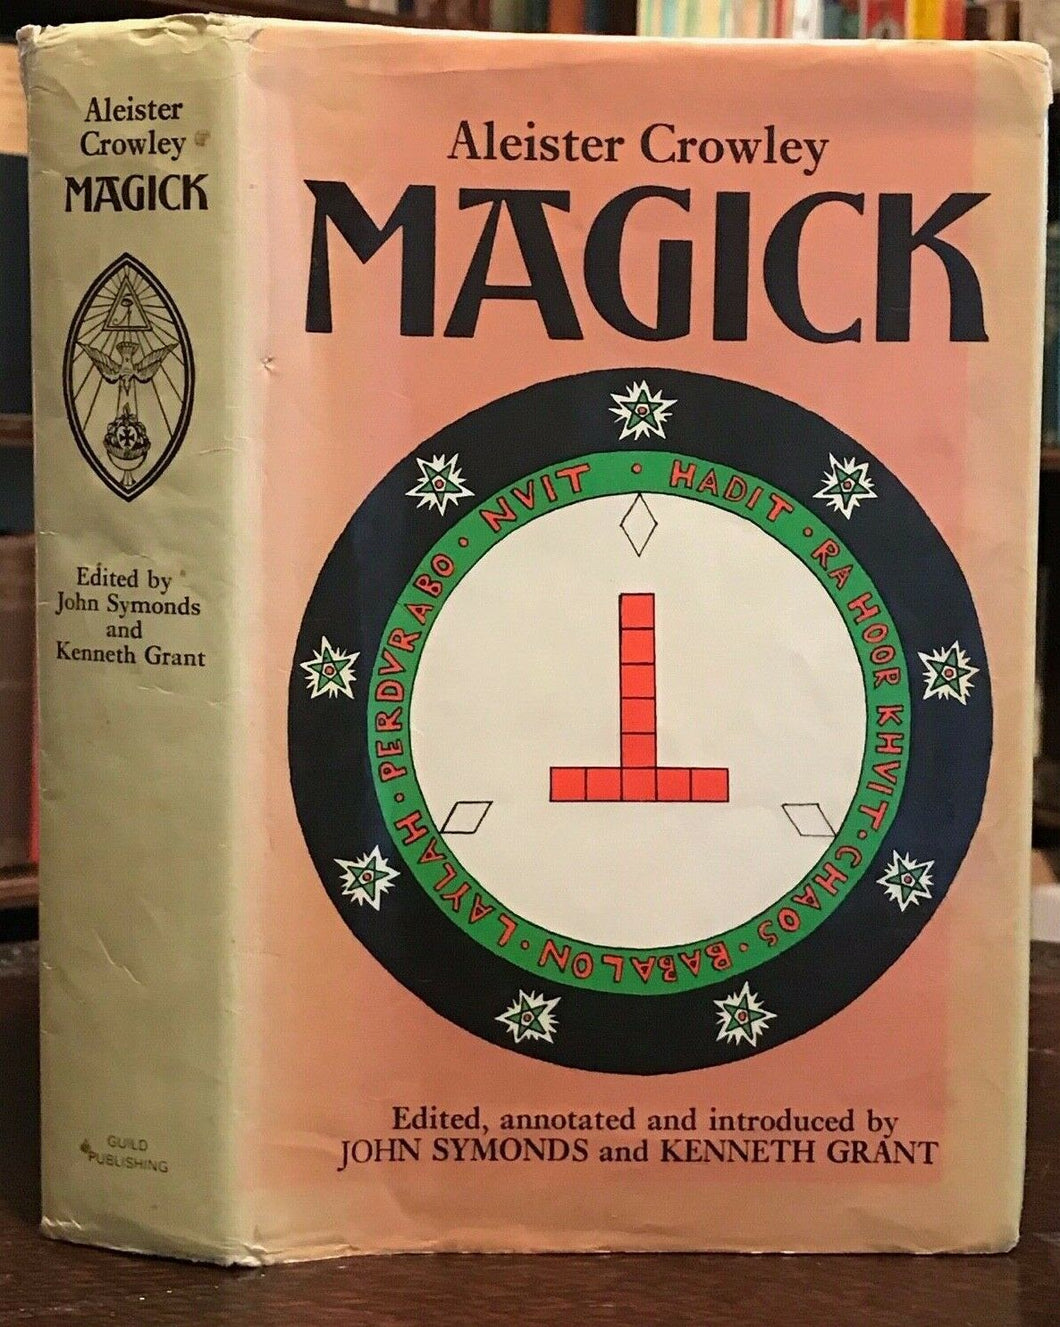 MAGICK - ALEISTER CROWLEY - John Symonds, Kenneth Grant - CEREMONIAL MAGICK